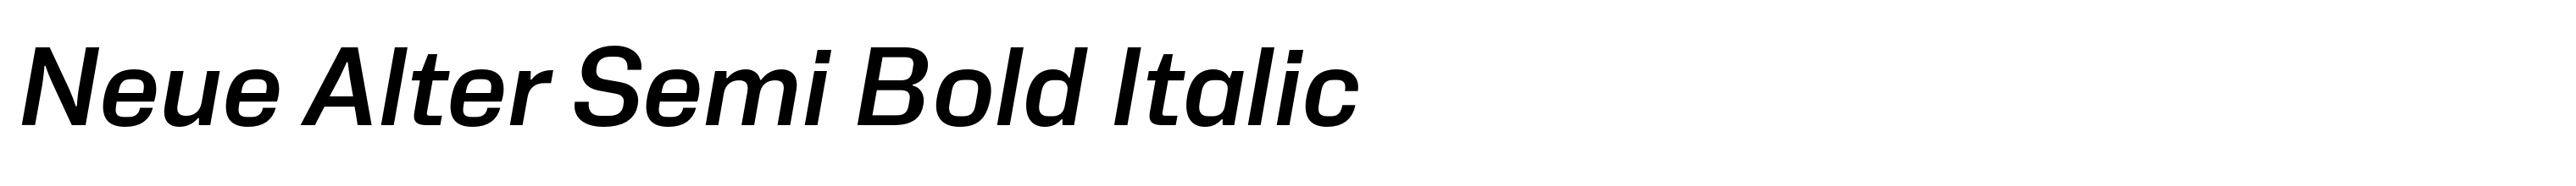 Neue Alter Semi Bold Italic